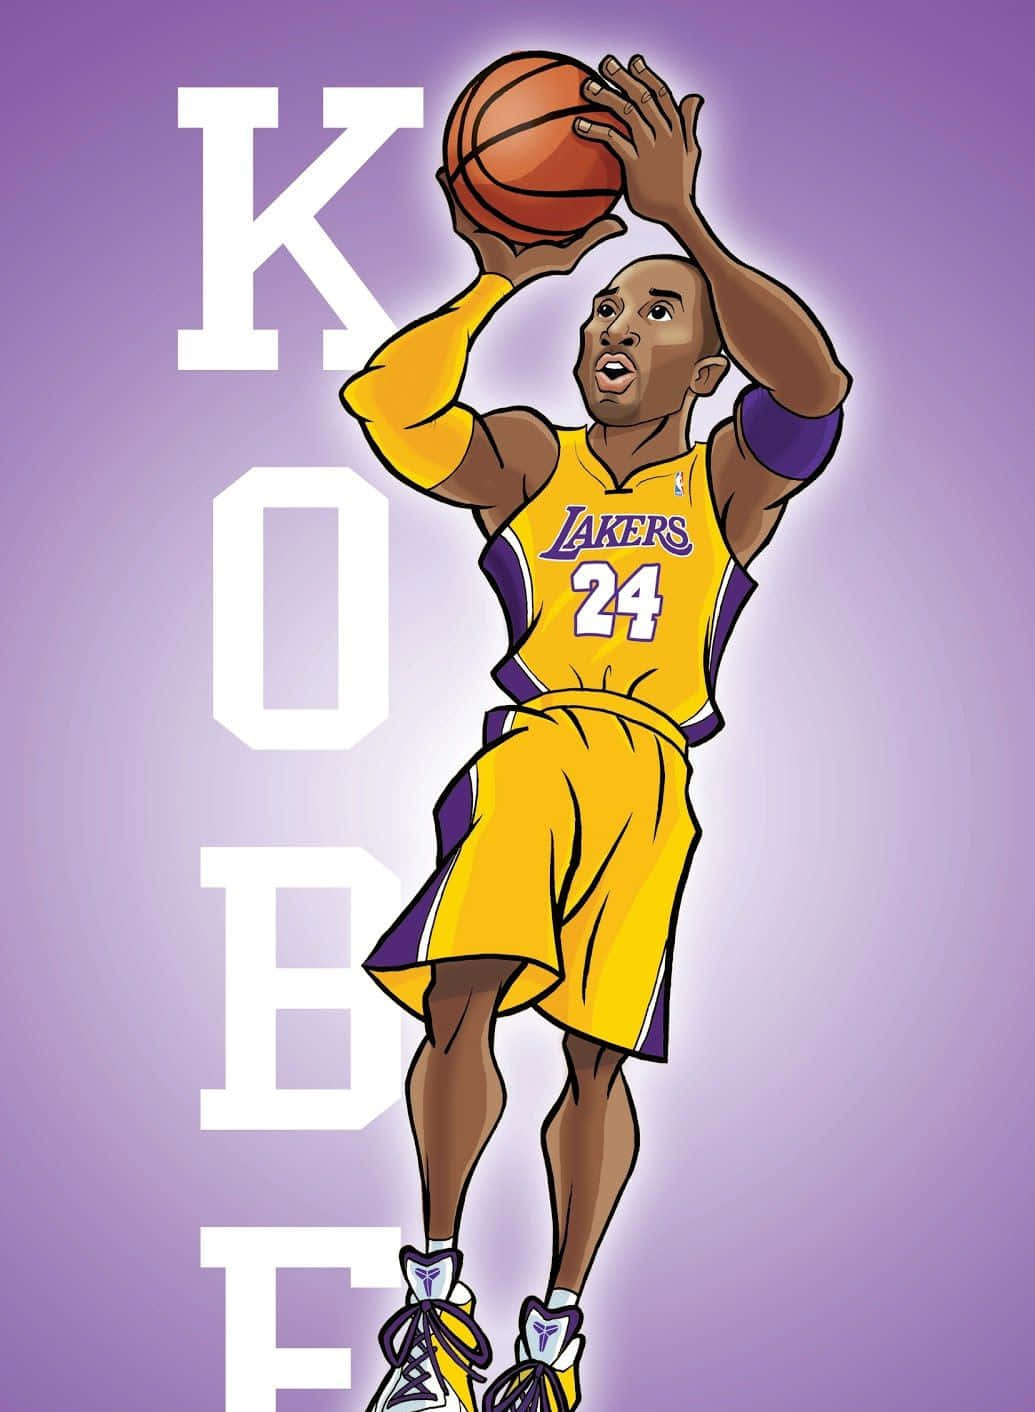 Leggendariogiocatore Dei Los Angeles Lakers, Kobe Bryant.